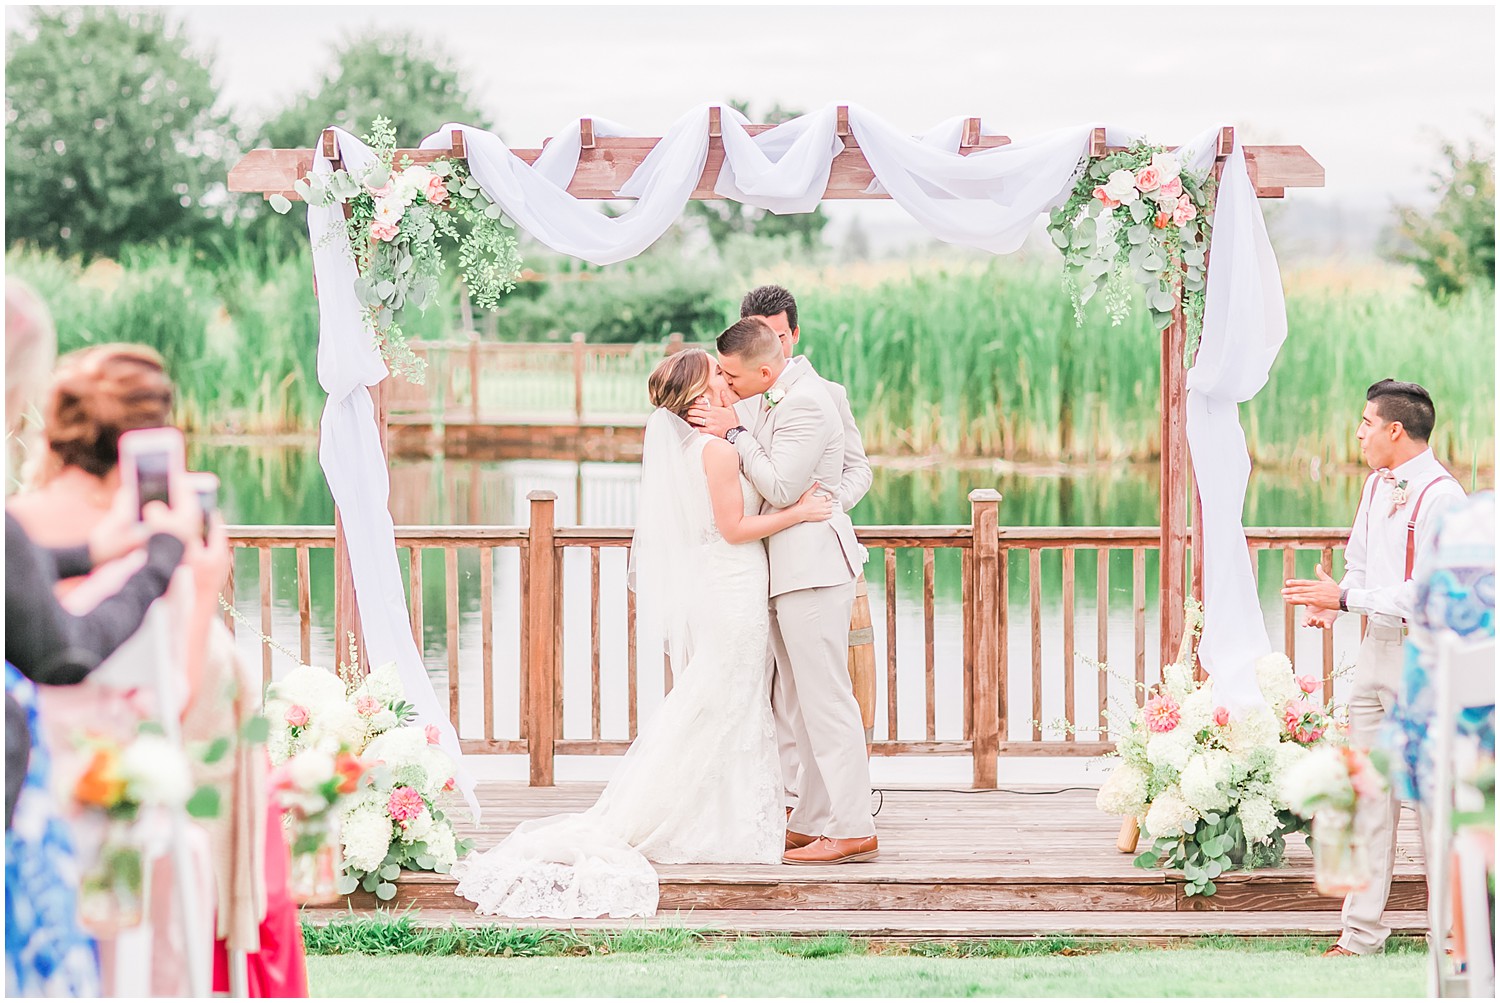 Swans Trail Farm Wedding | Chance & Gracia